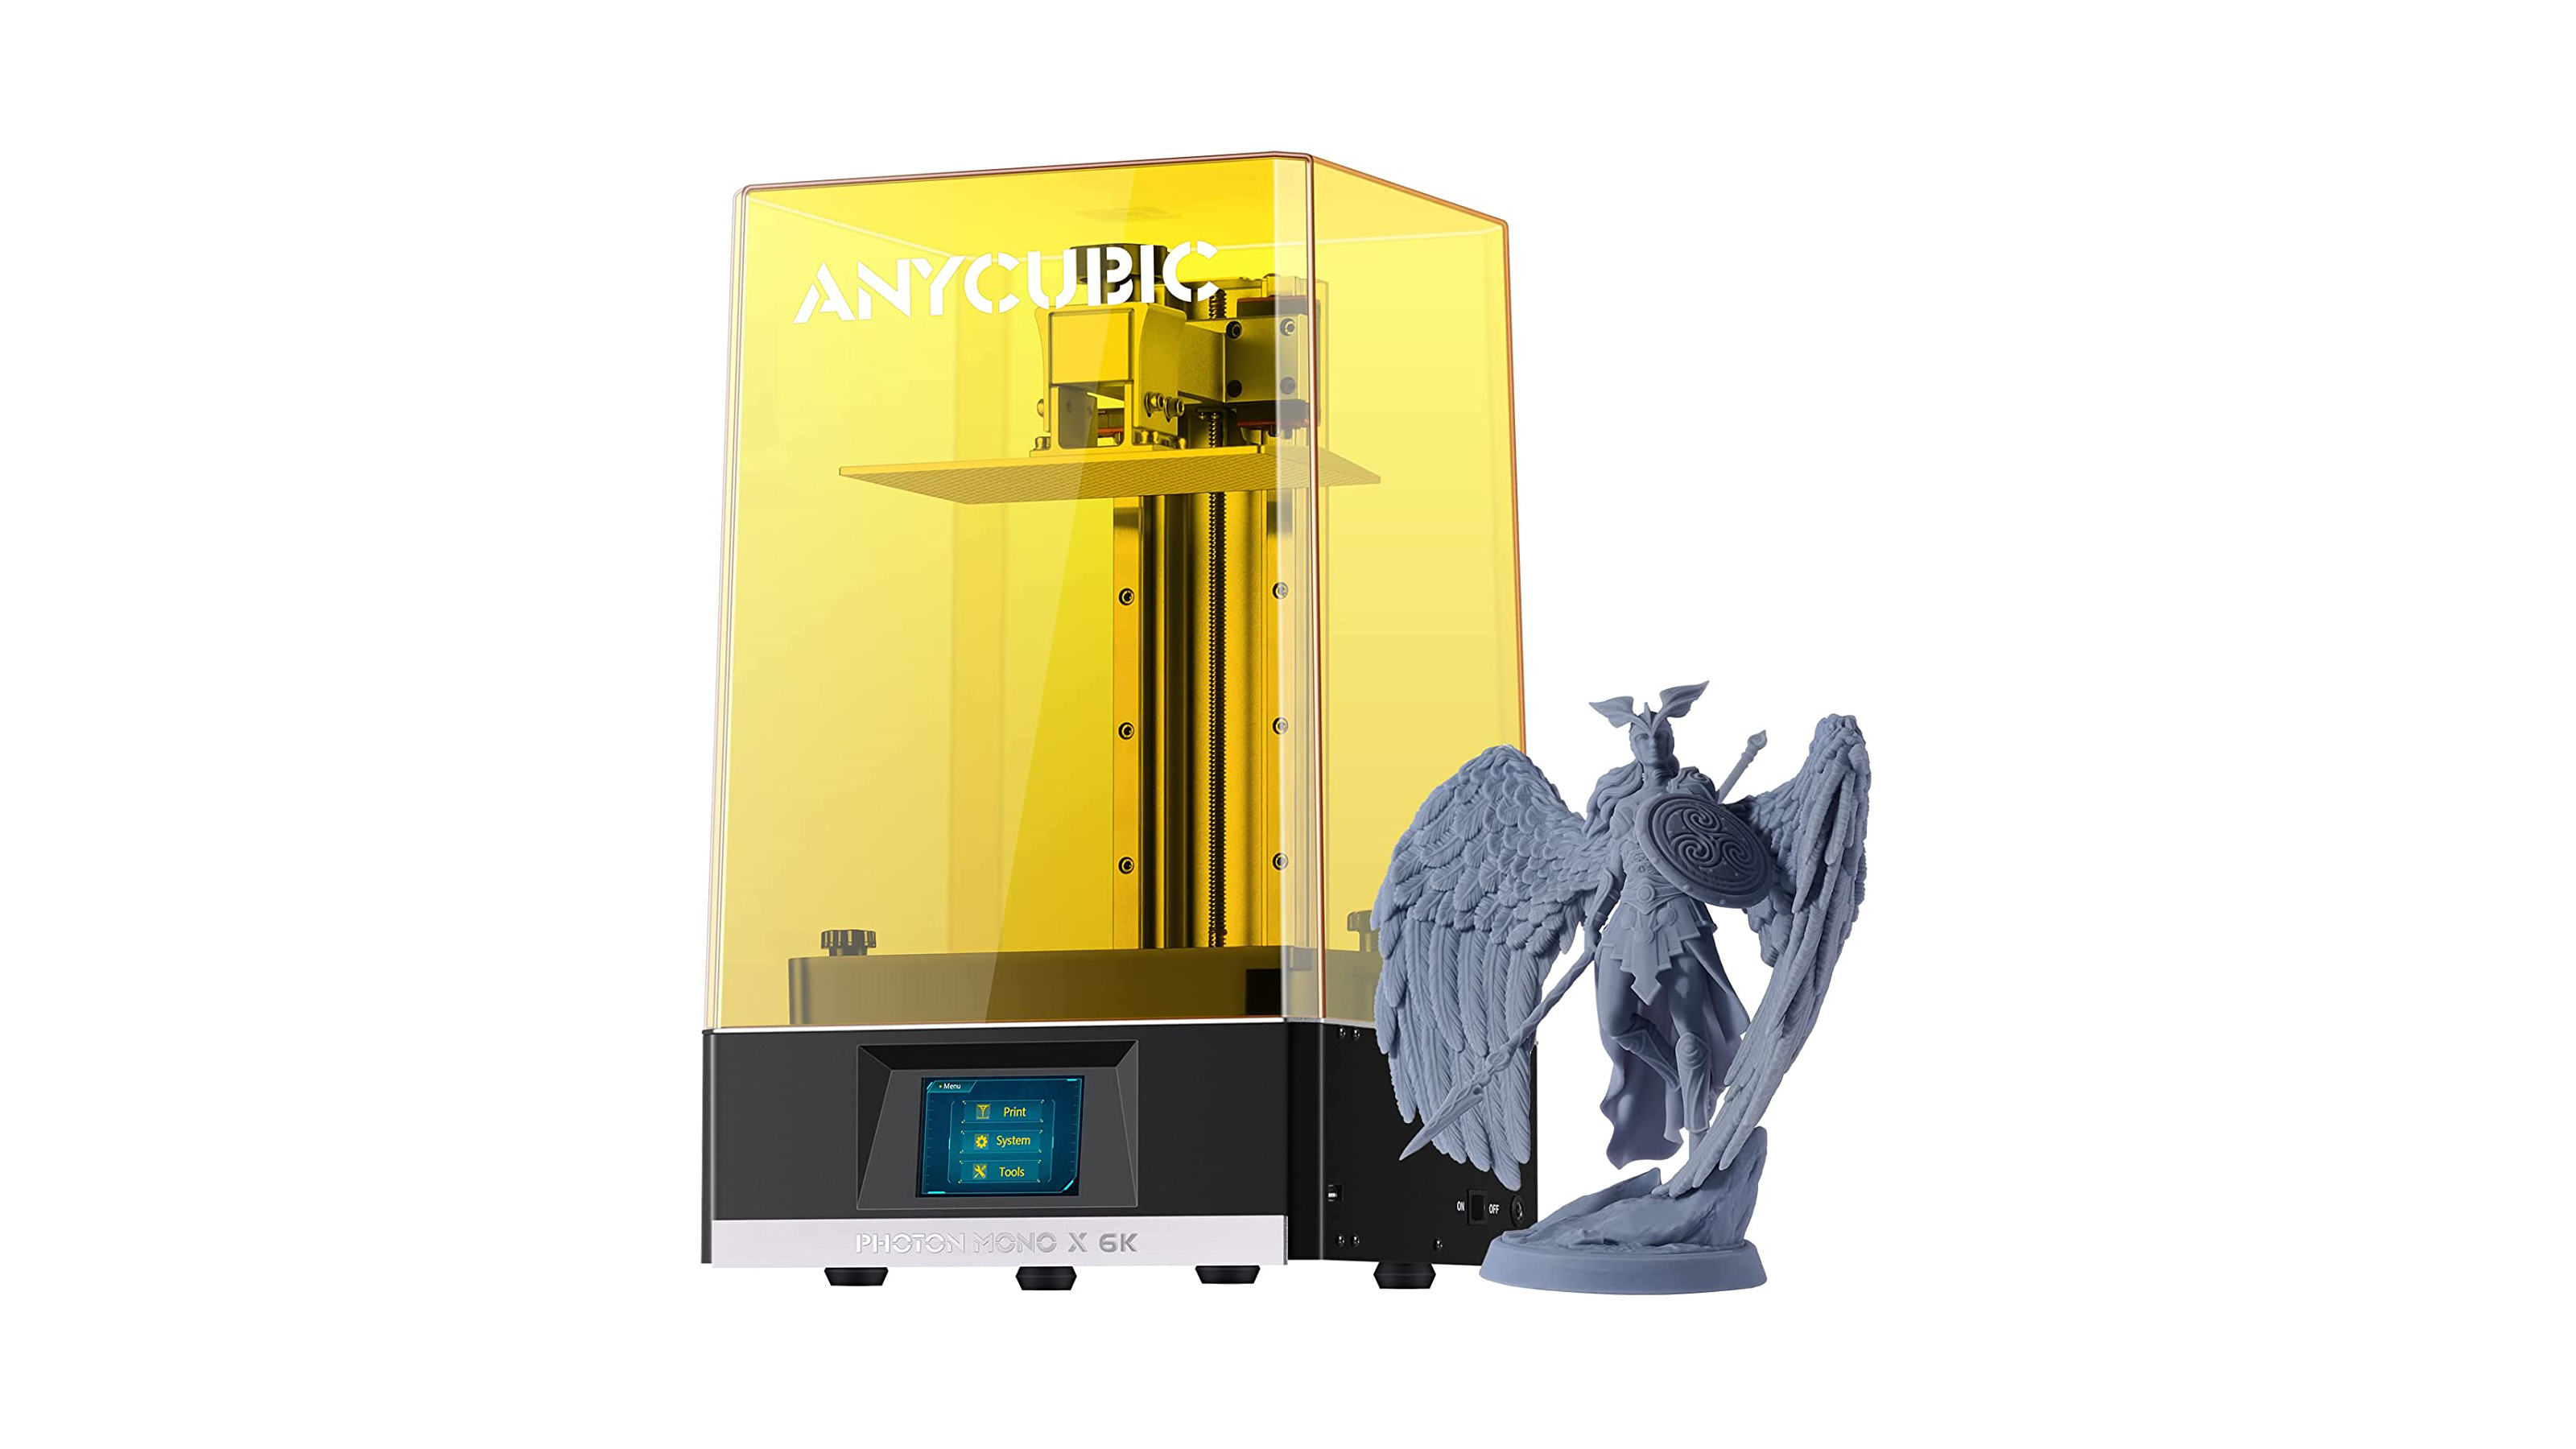 Anycubic mono 6k